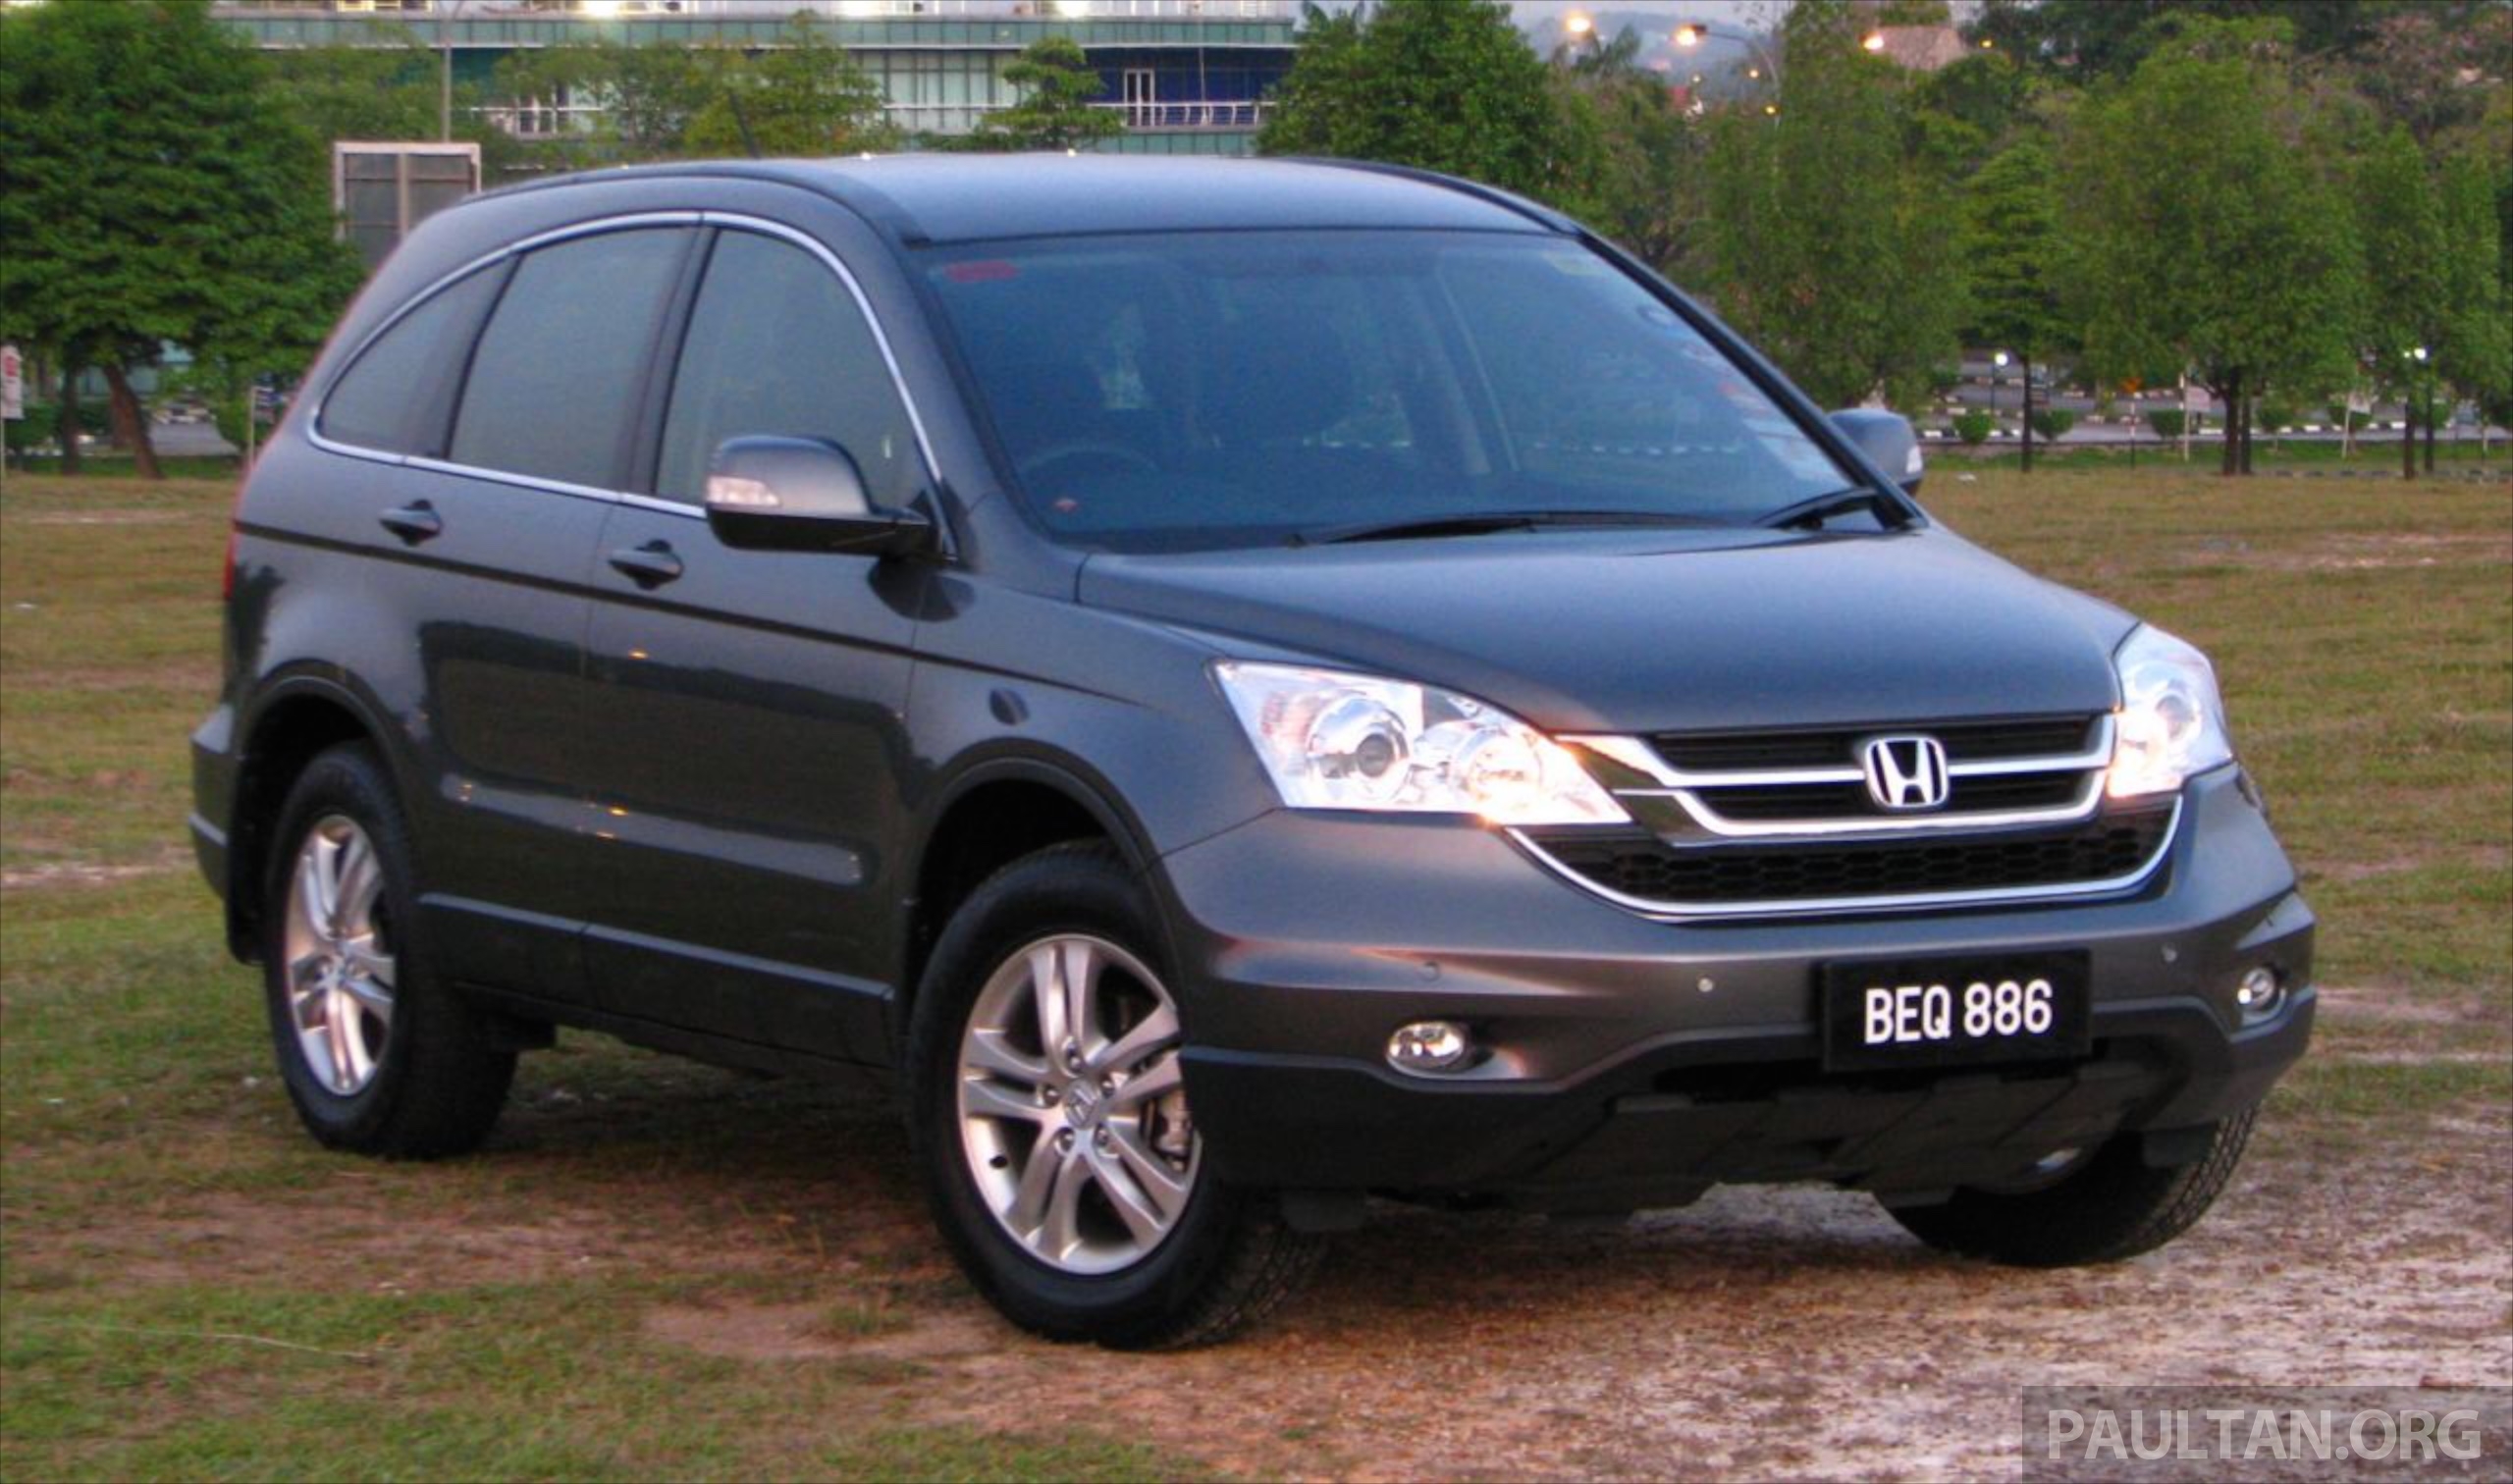 Honda CRV 2008. CR-V 2008. Honda CR-V SUV 2008. Хонда СРВ 2008. Хонда црв 2008 купить